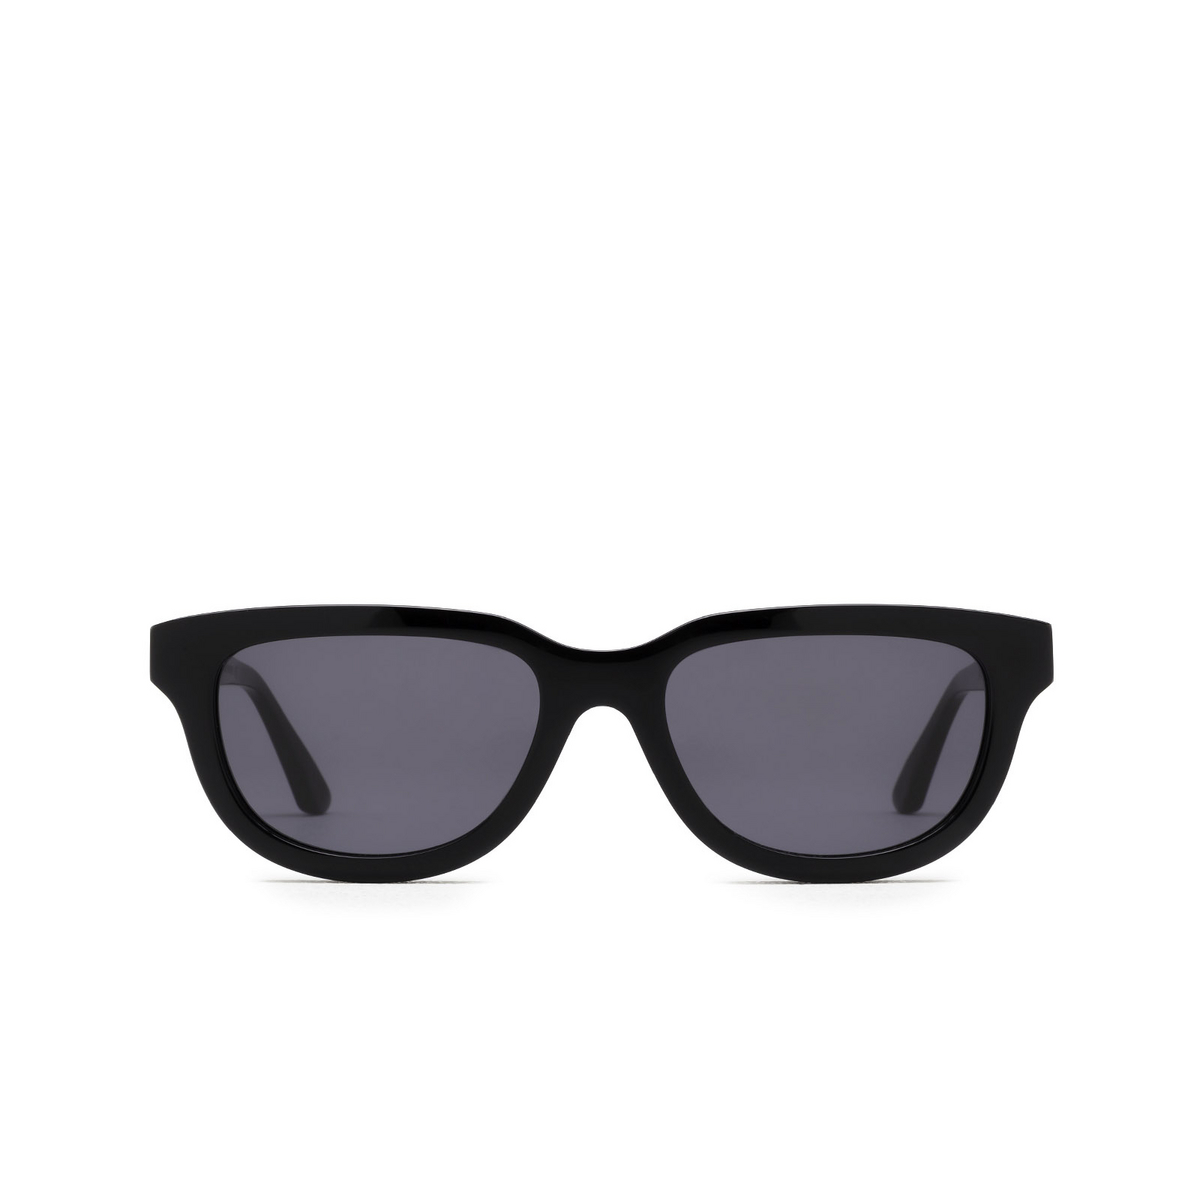 Huma LION Sunglasses 06 Black - front view